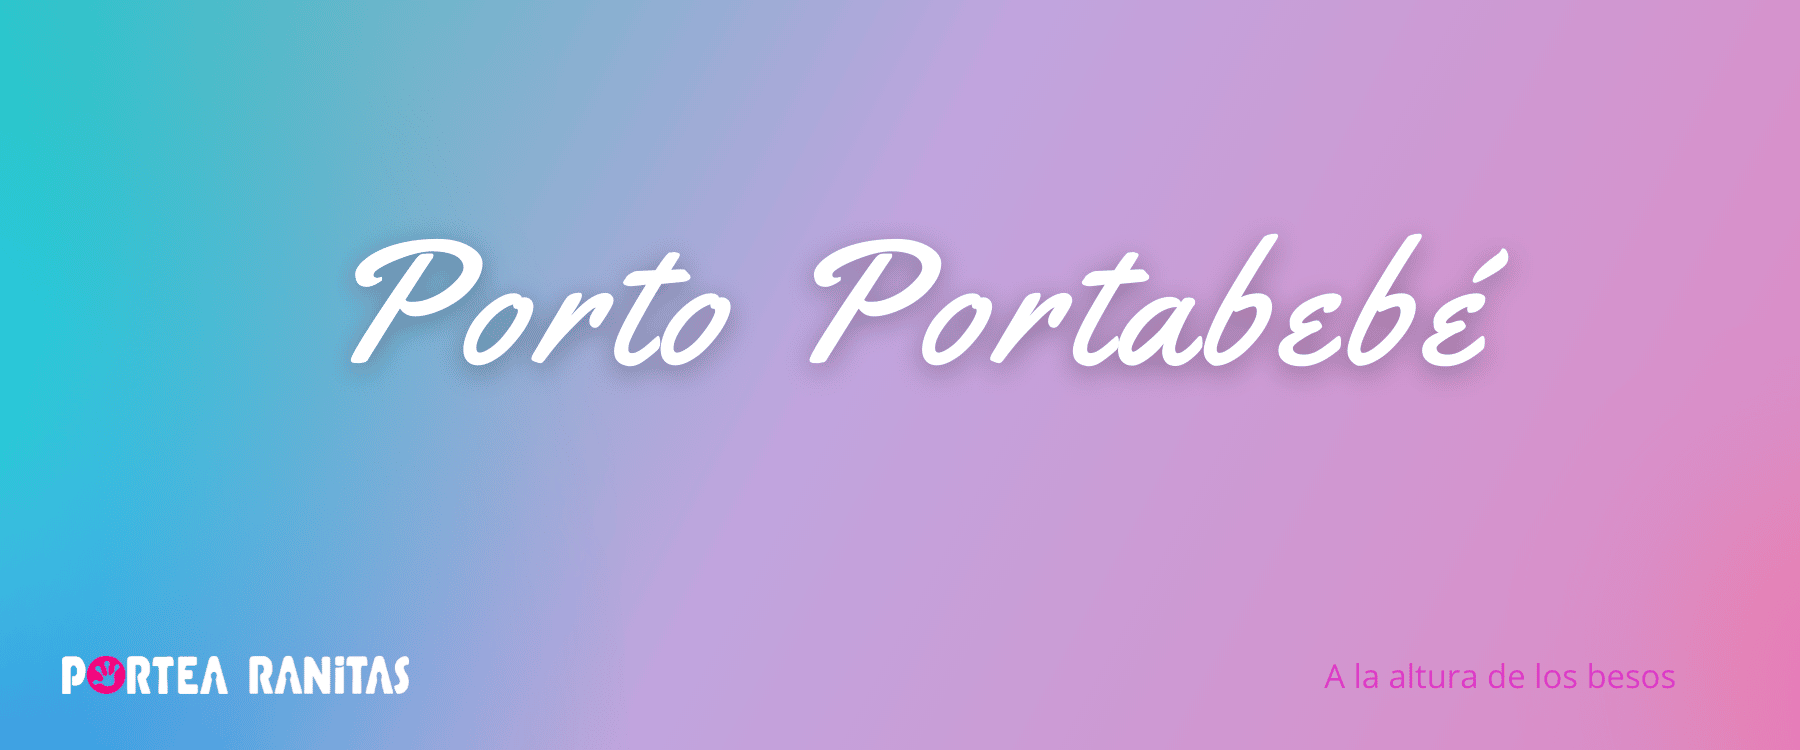 Porto portabebe